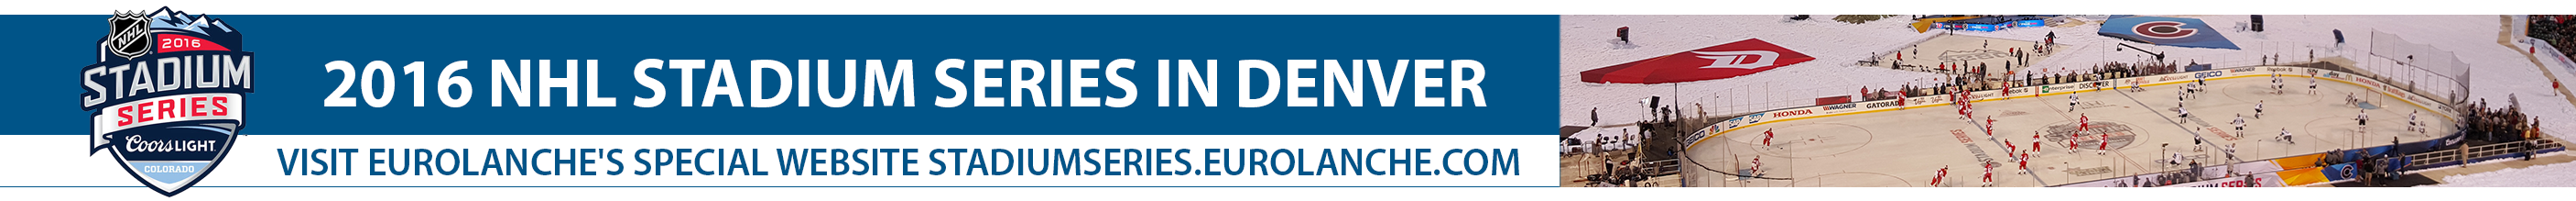 Coors Light Stadium Series 2016 in Denver - by Eurolanche - banner